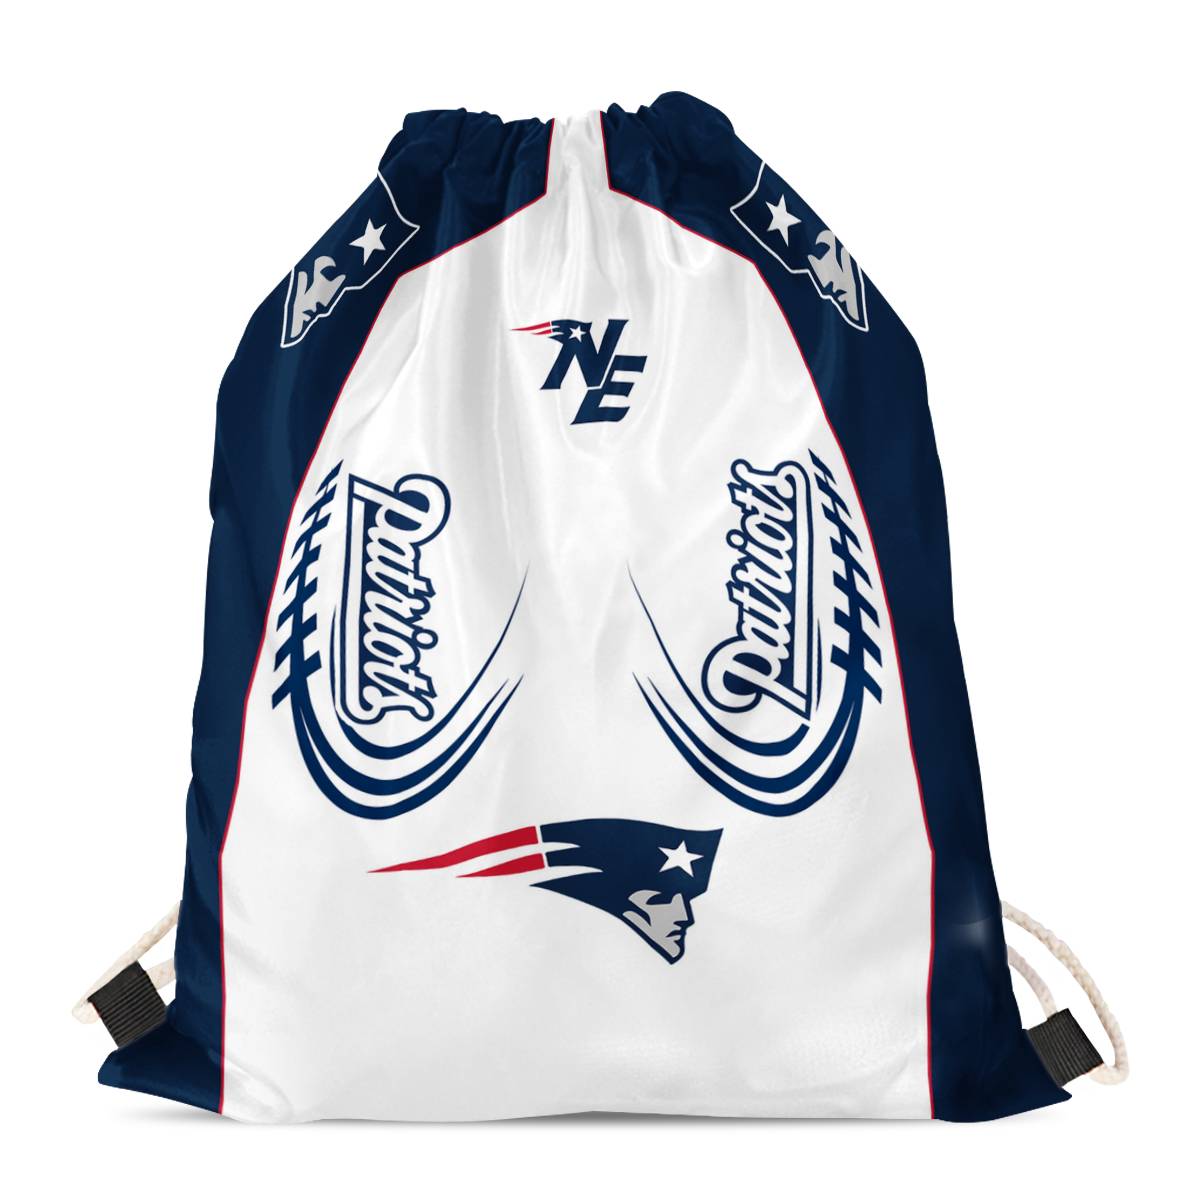 New England Patriots Drawstring Backpack sack / Gym bag 18" x 14" 002